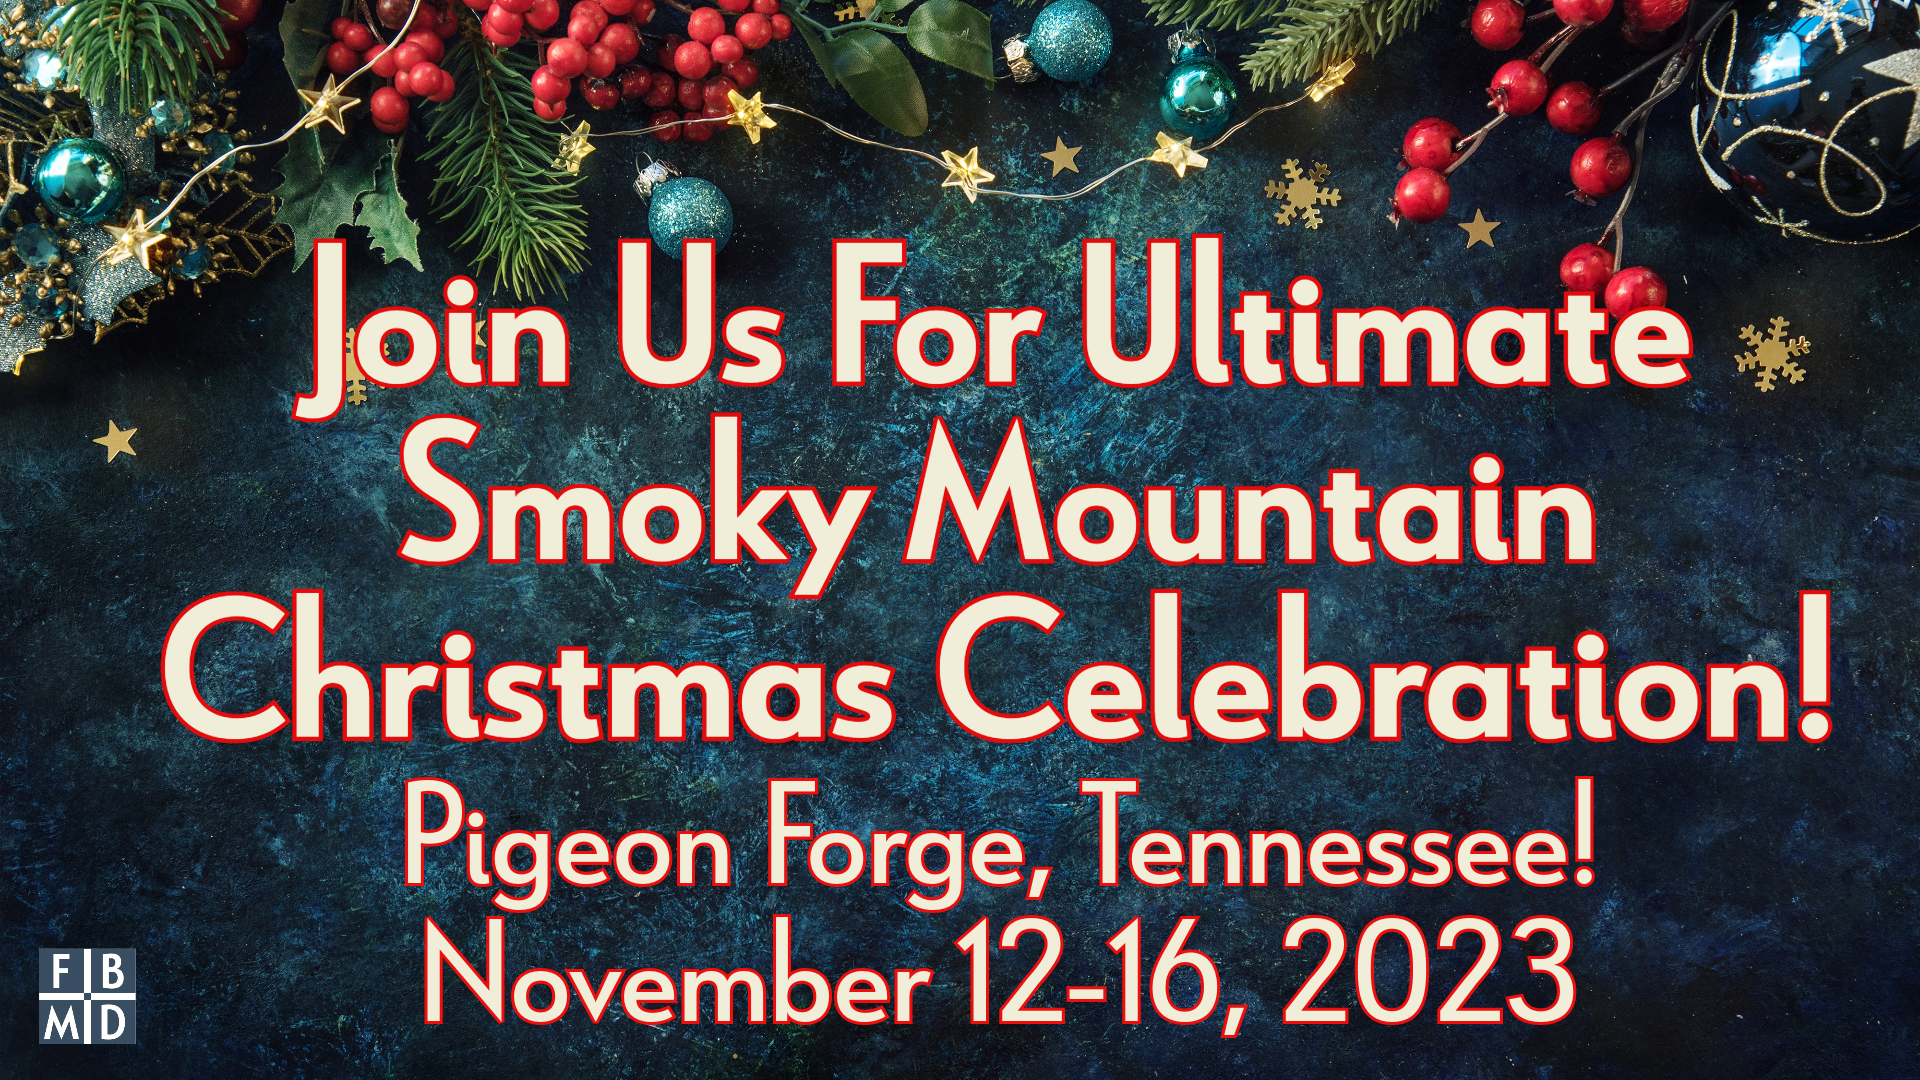 invitation to Smoky Mountain Christmas, background image of Christmas garland with teal bulbs and gold stars.